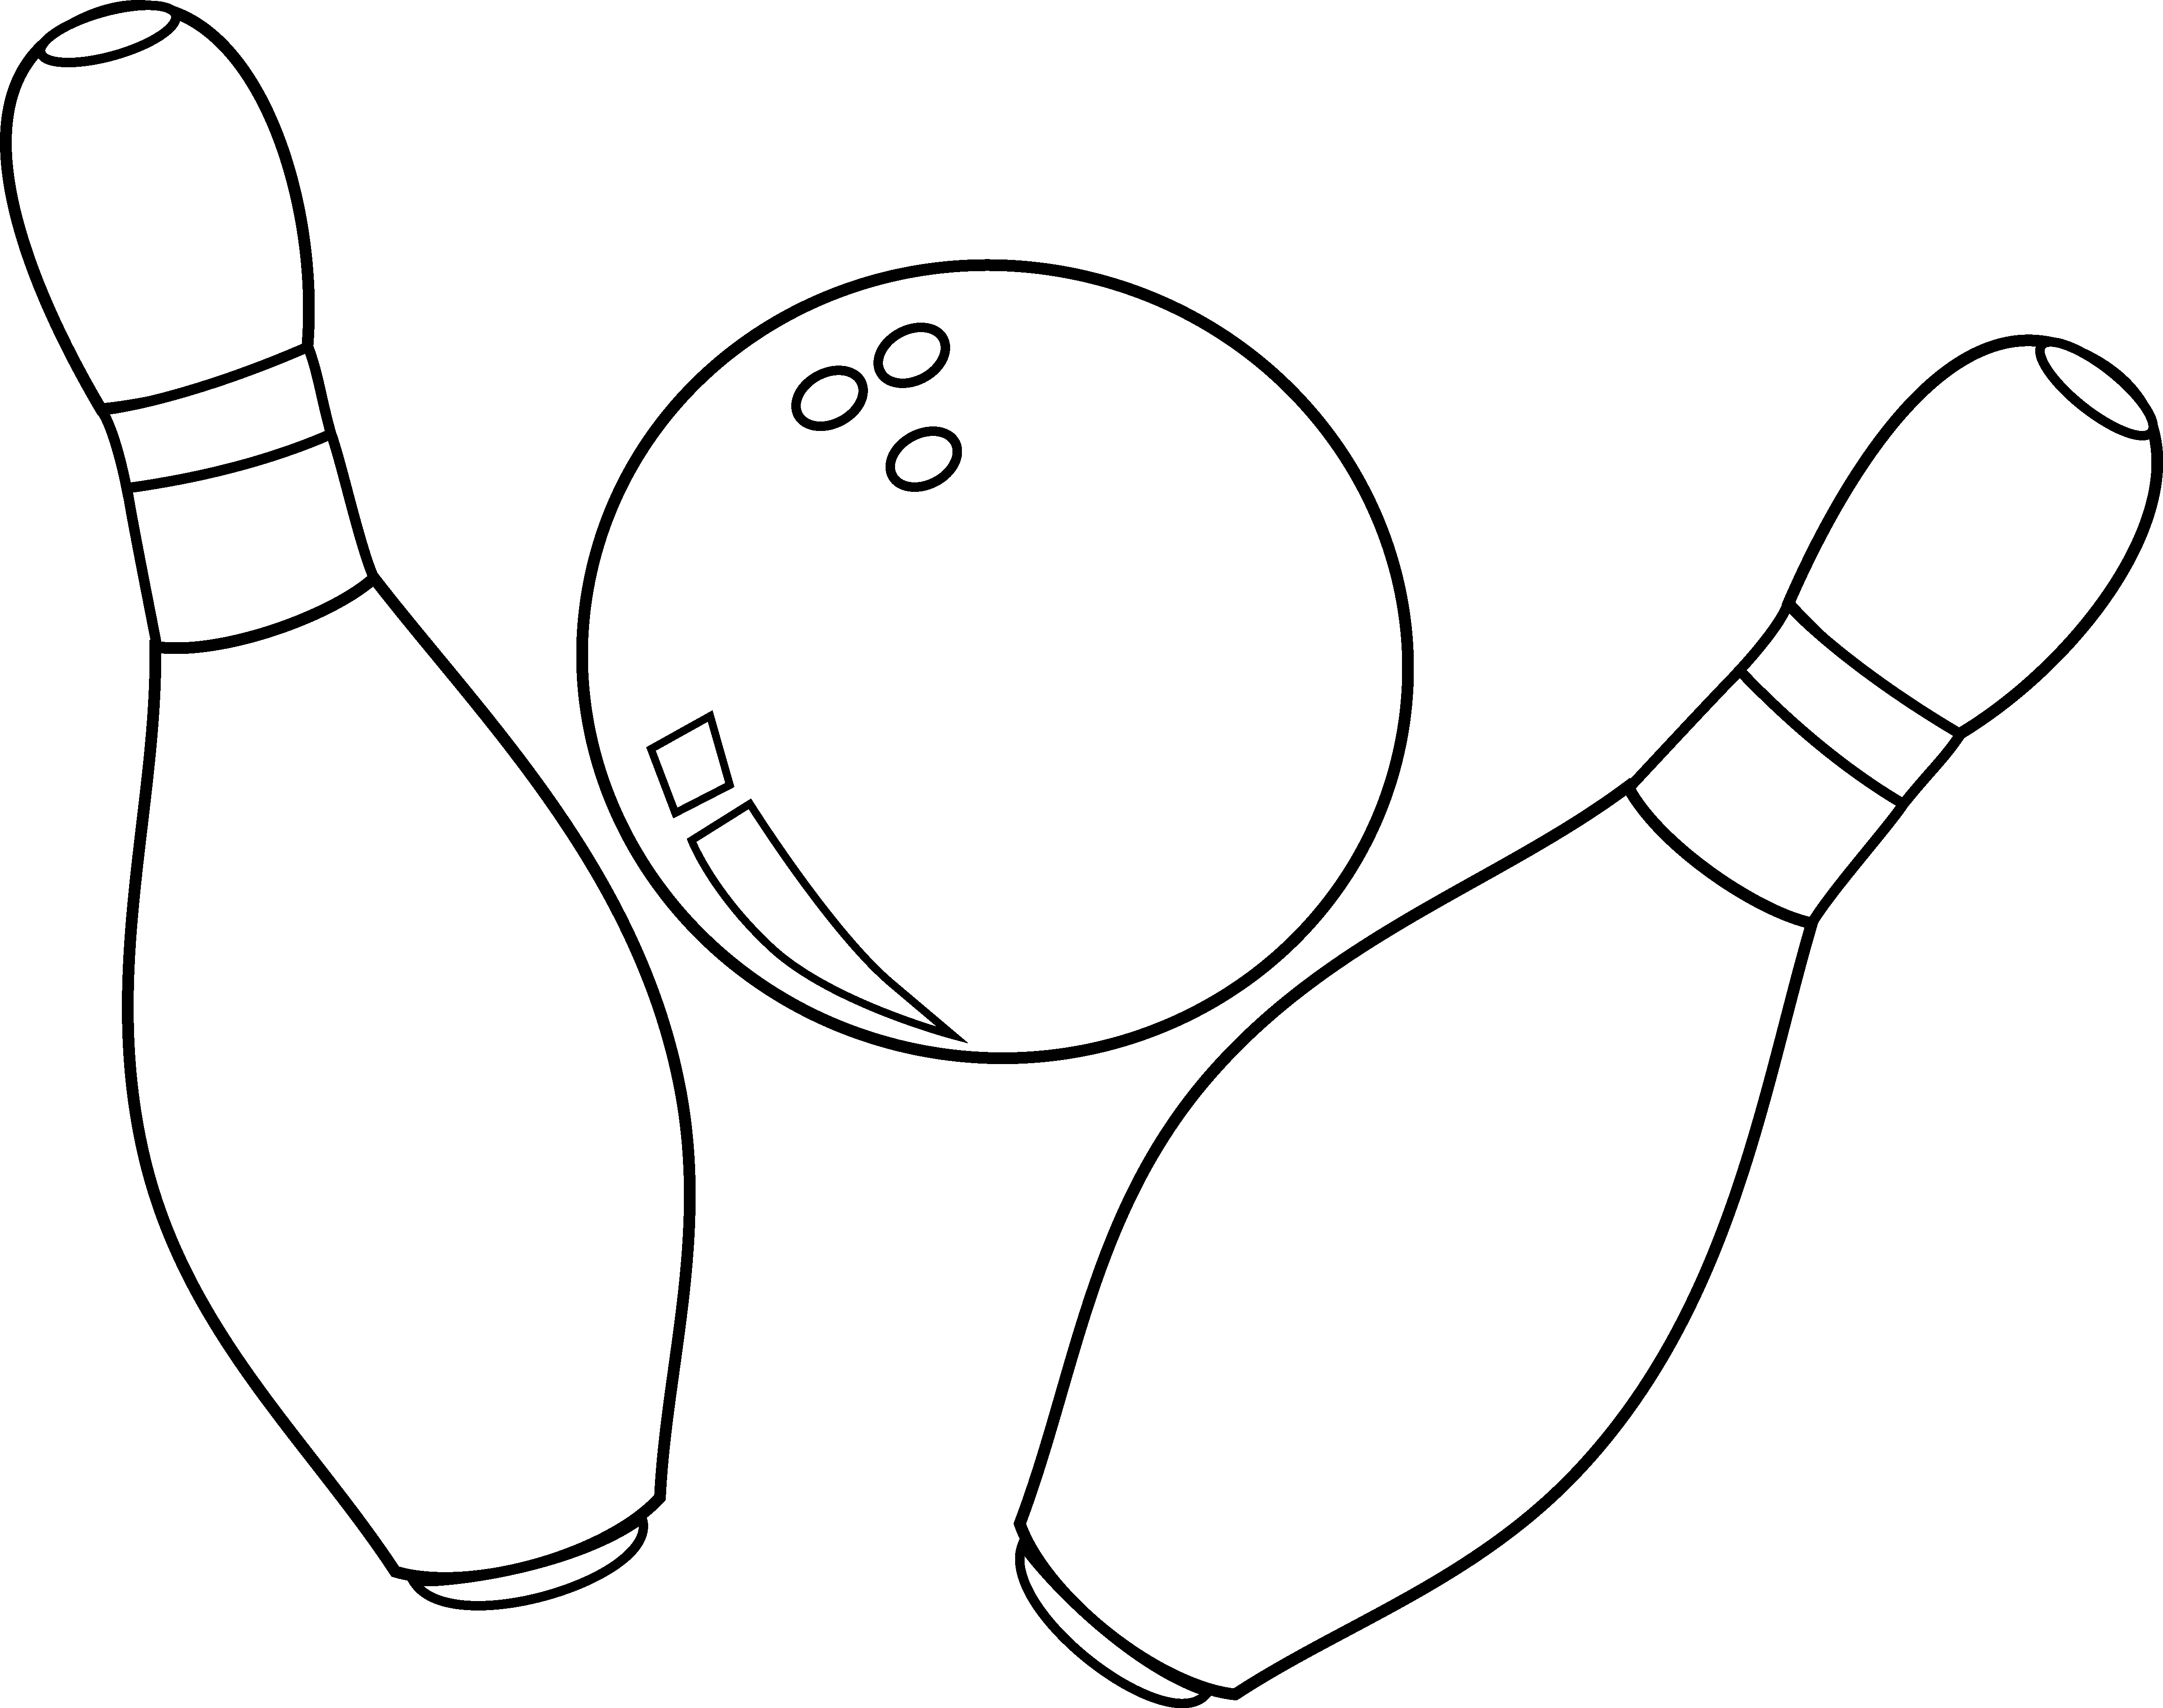 Bowling Pin Template